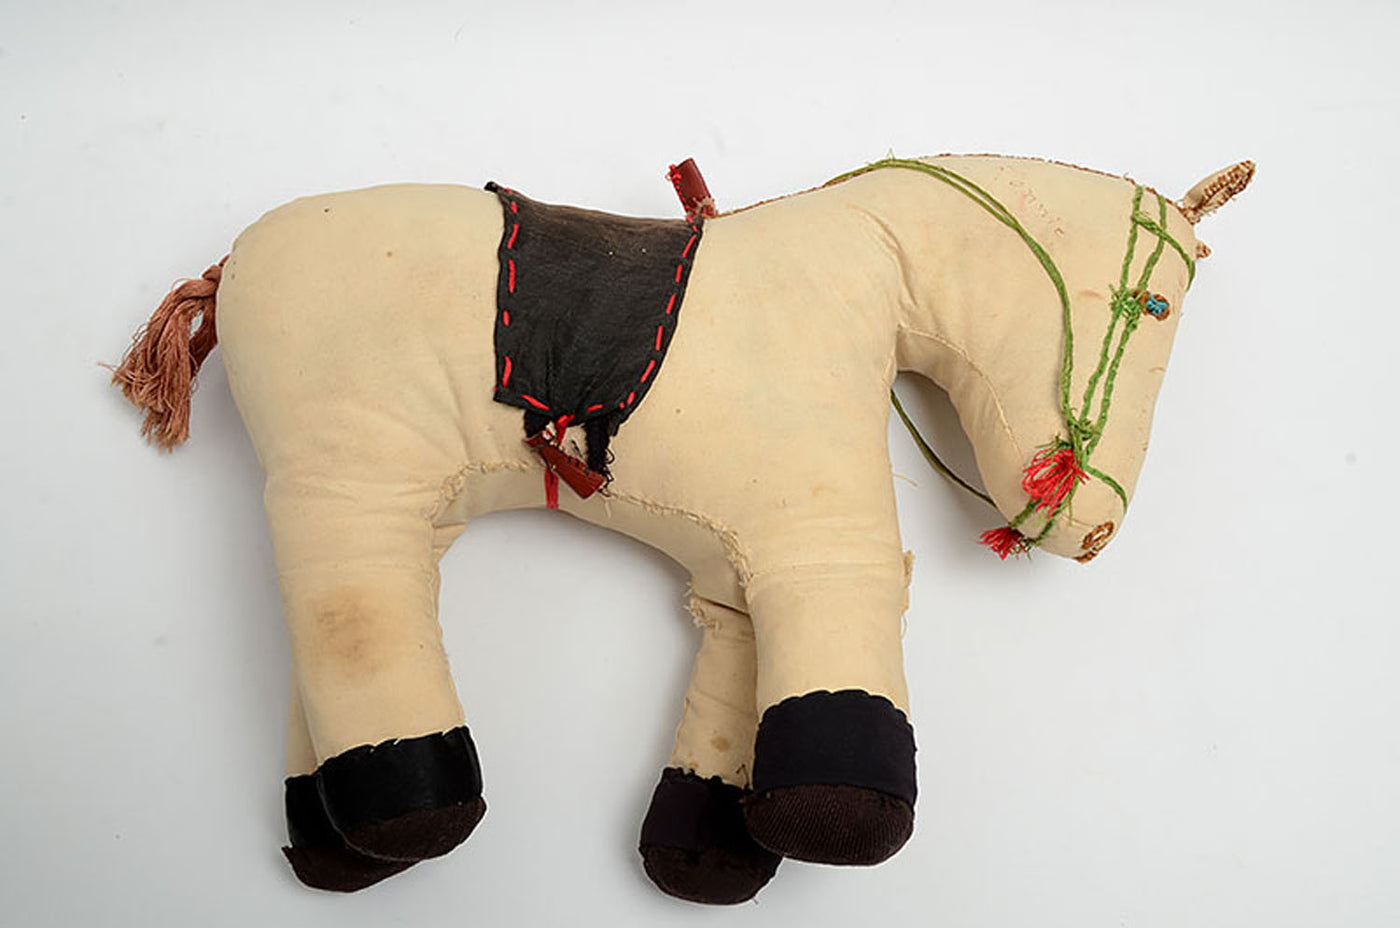 1226882-amish-homemade-animal-toy-horse-facing-right-b